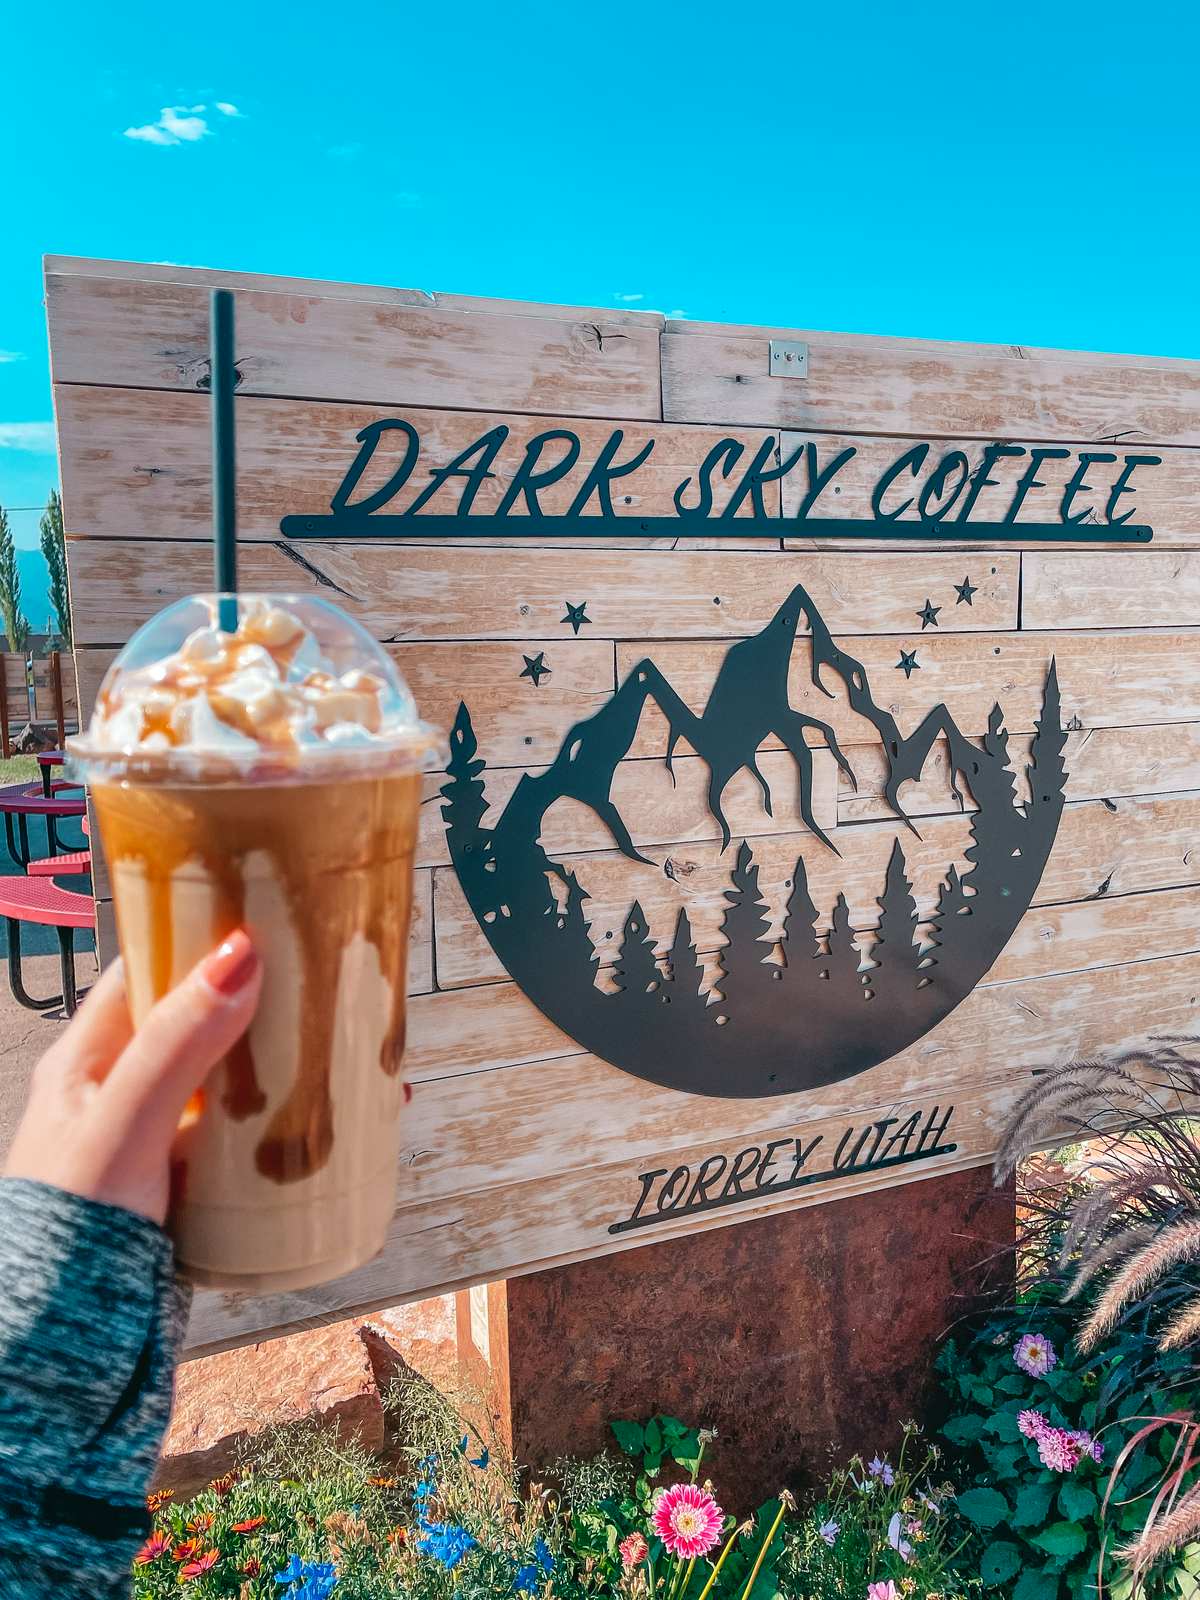 Delicious frappuccino from Dark Sky Coffee in Torrey Utah